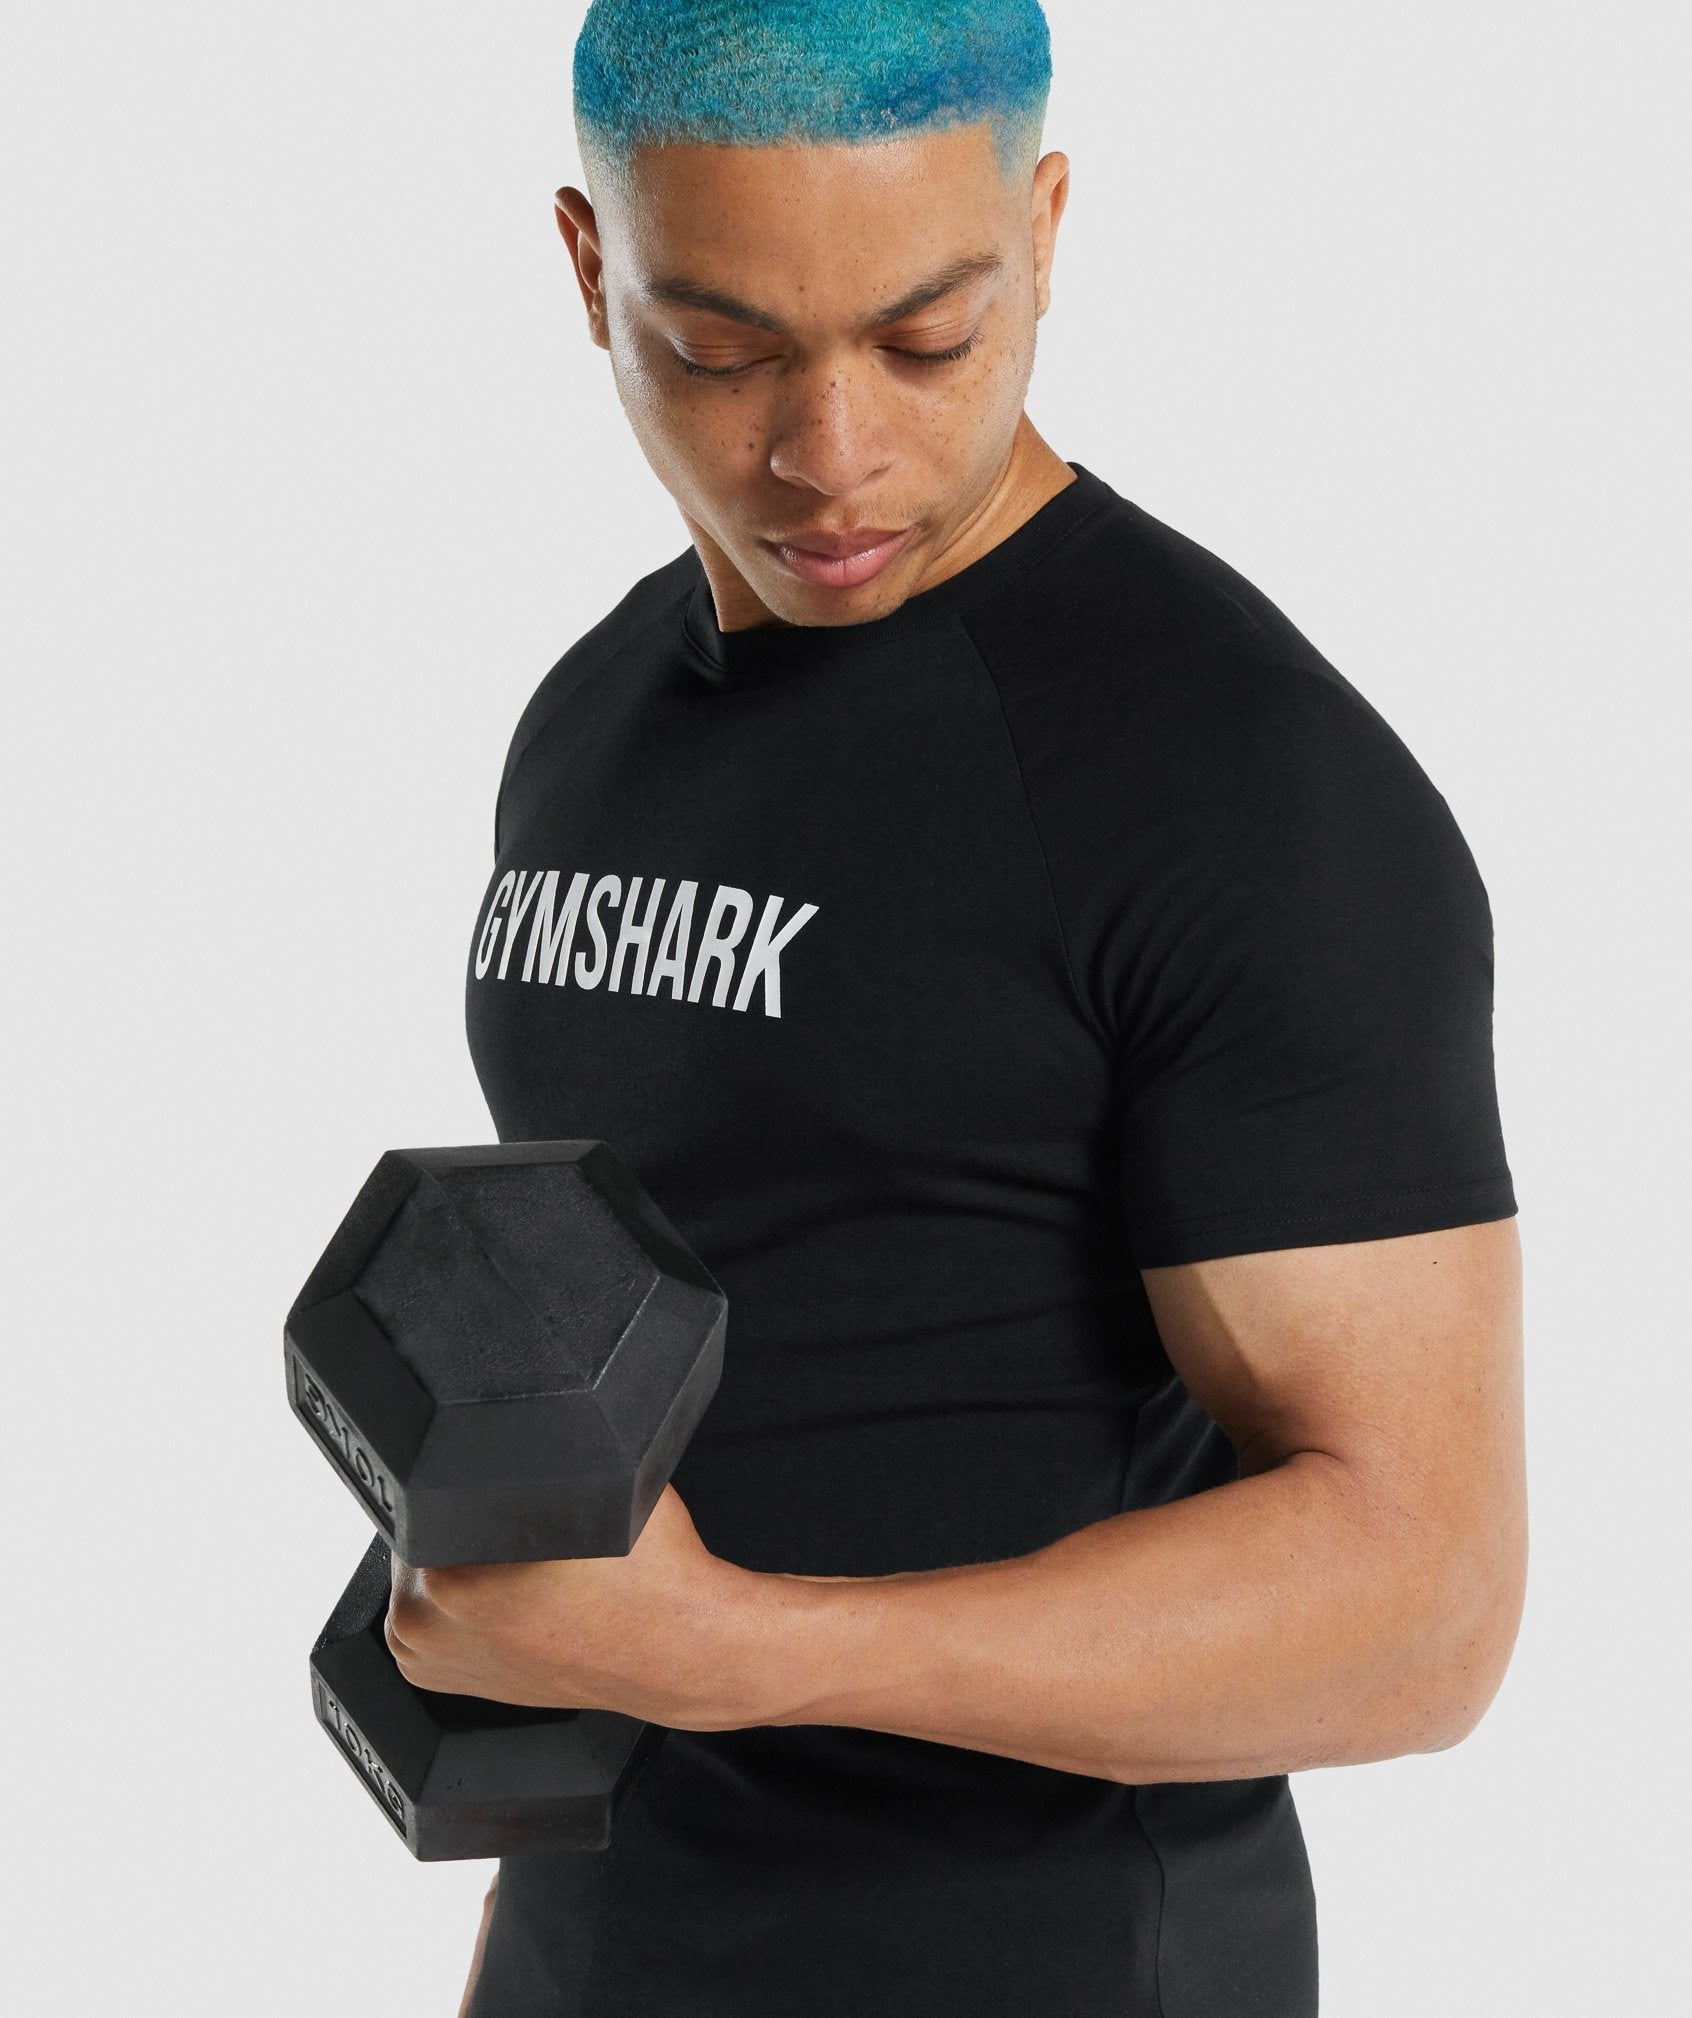 Gymshark Mens S Apollo Long Sleeve T-Shirt Black Crewneck Athletic